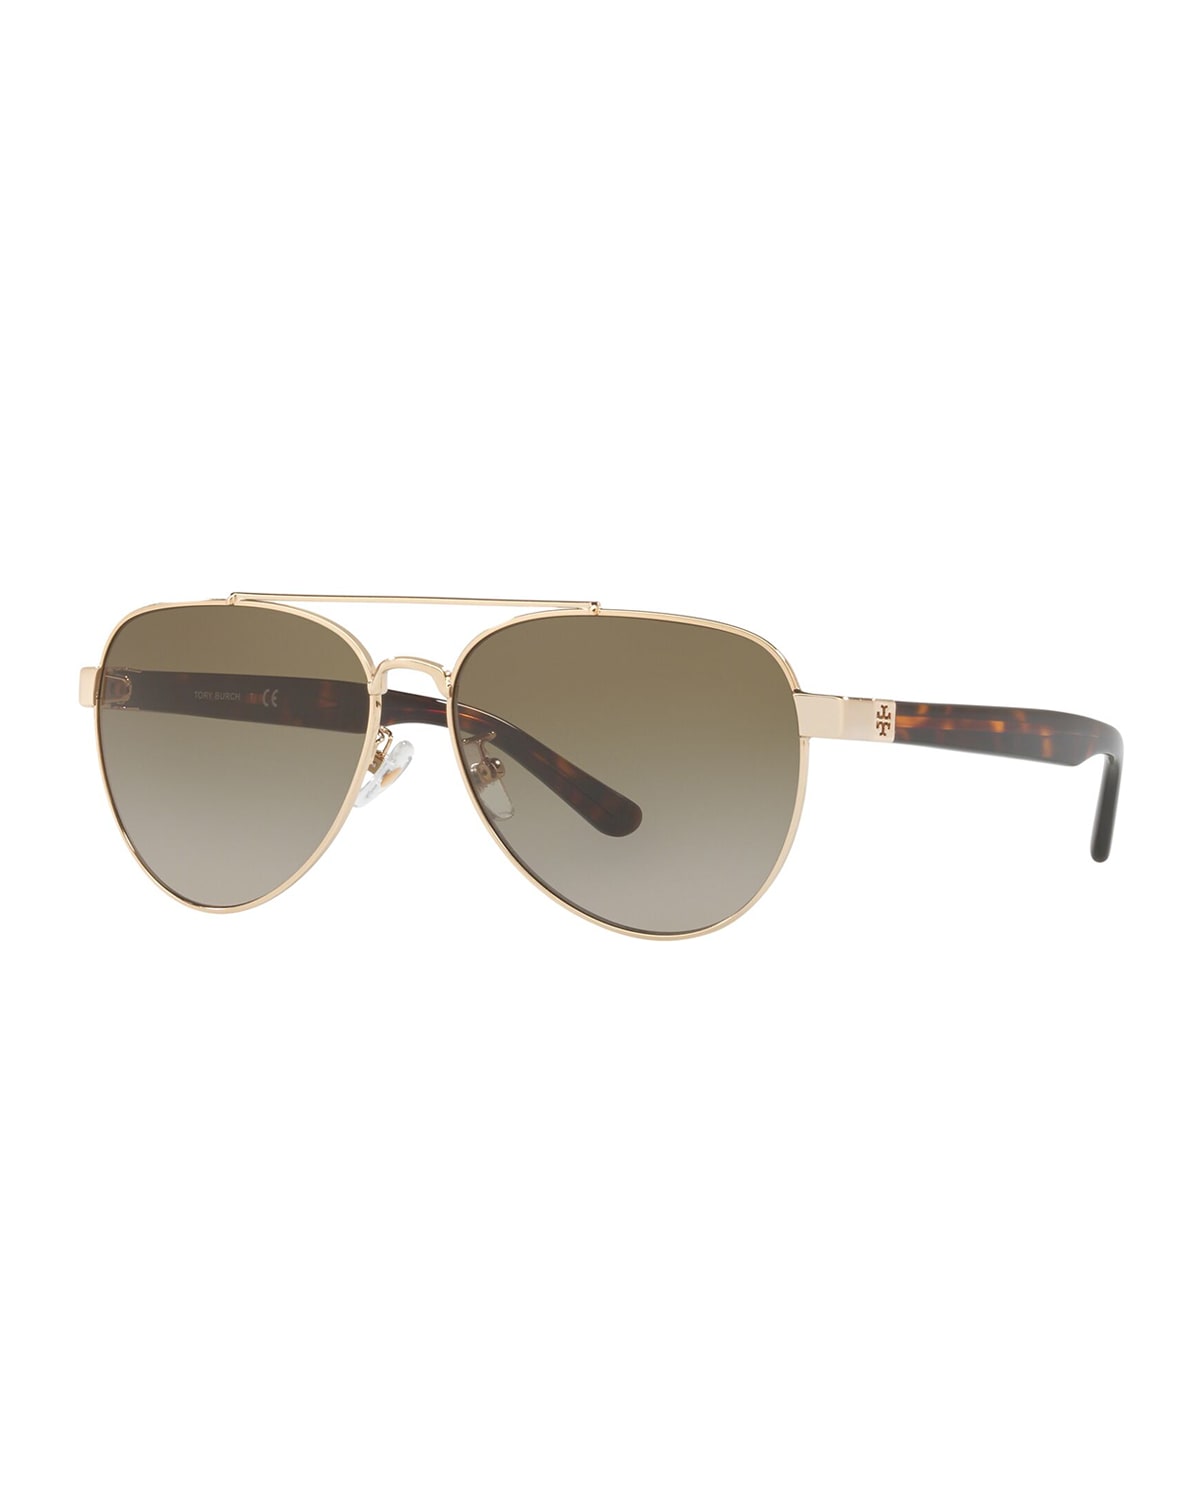 Tory Burch Polarized Metal Aviator Sunglasses | Neiman Marcus